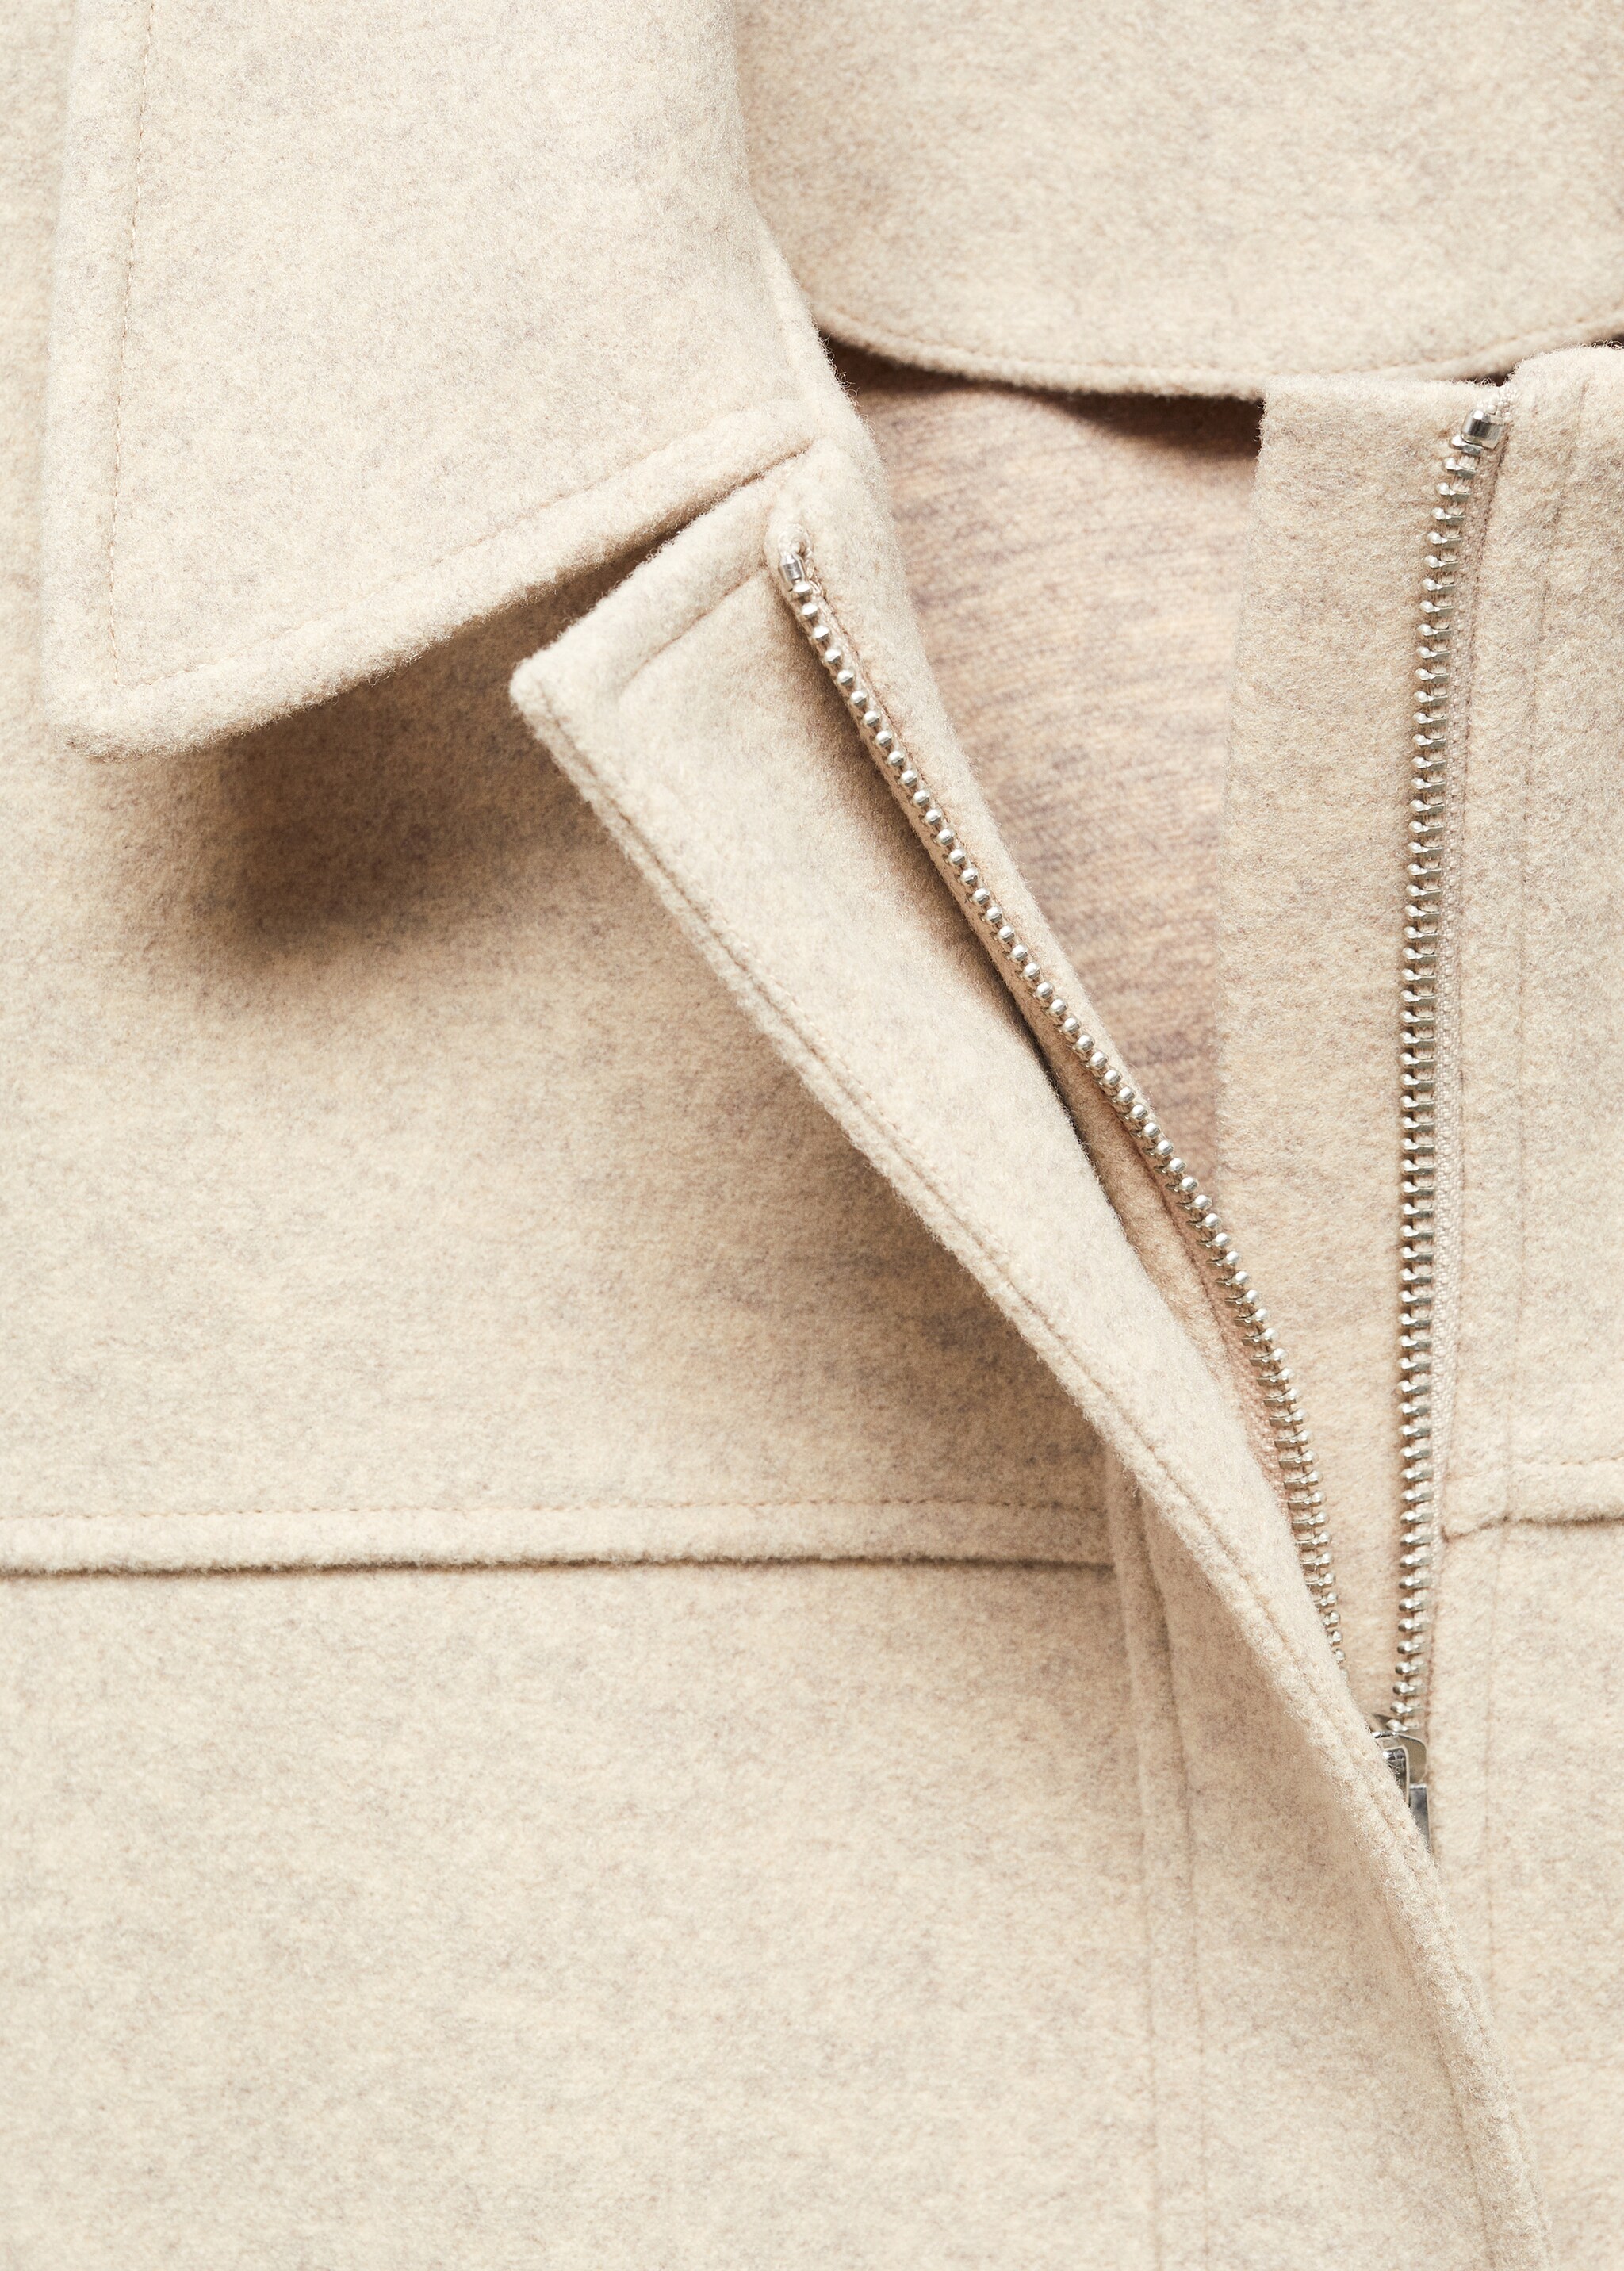 Zipper decorative seams jacket - Details of the article 8